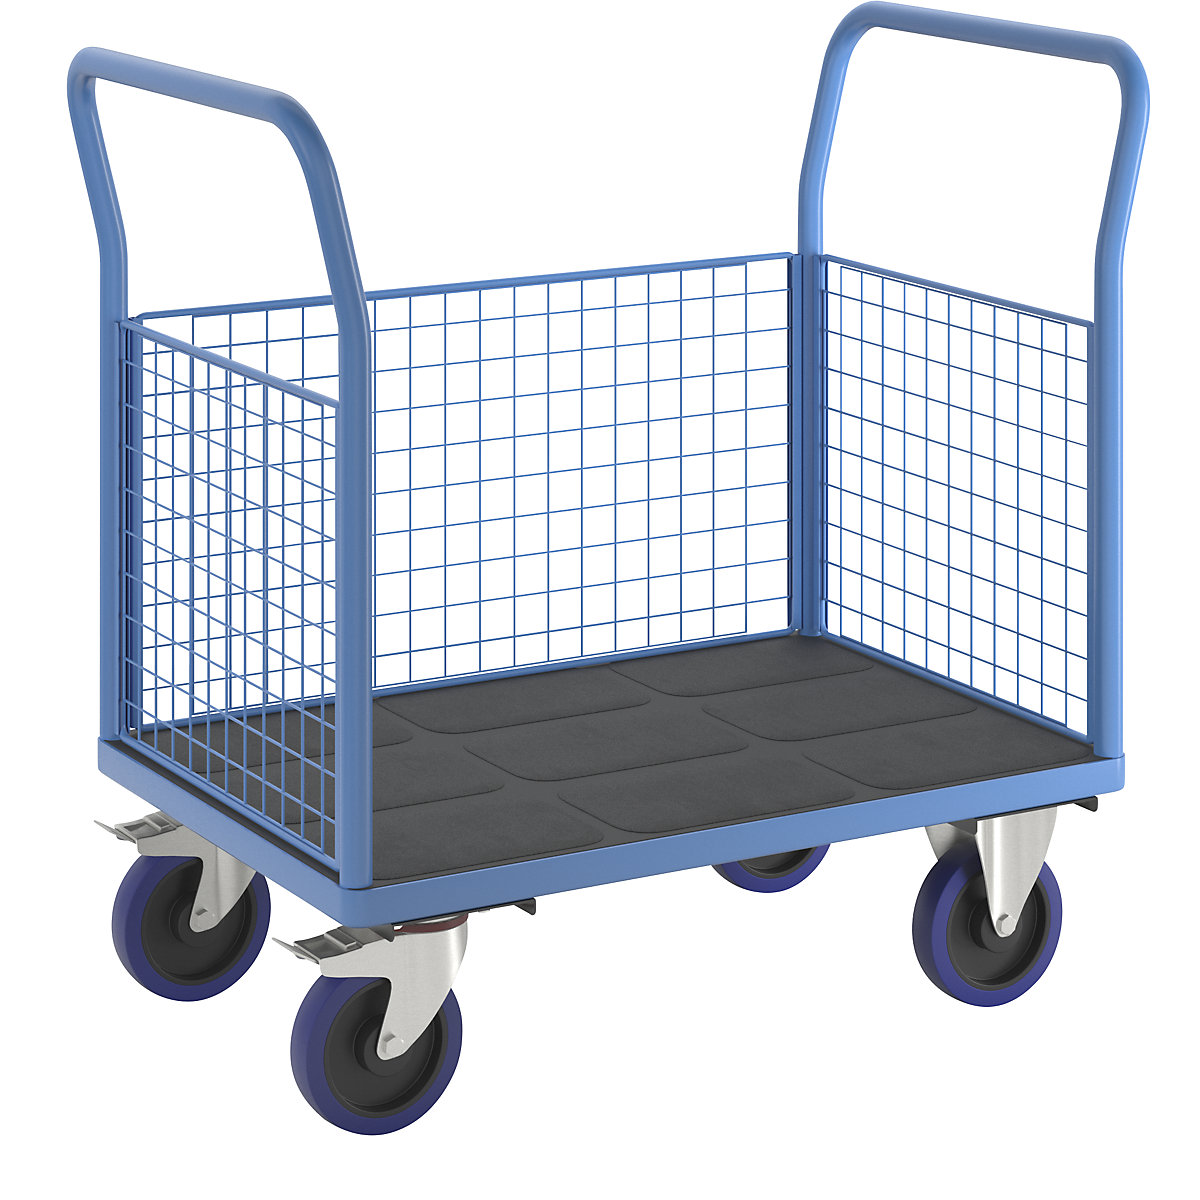 Plošinový vozík s mřížkovými stěnami – eurokraft pro